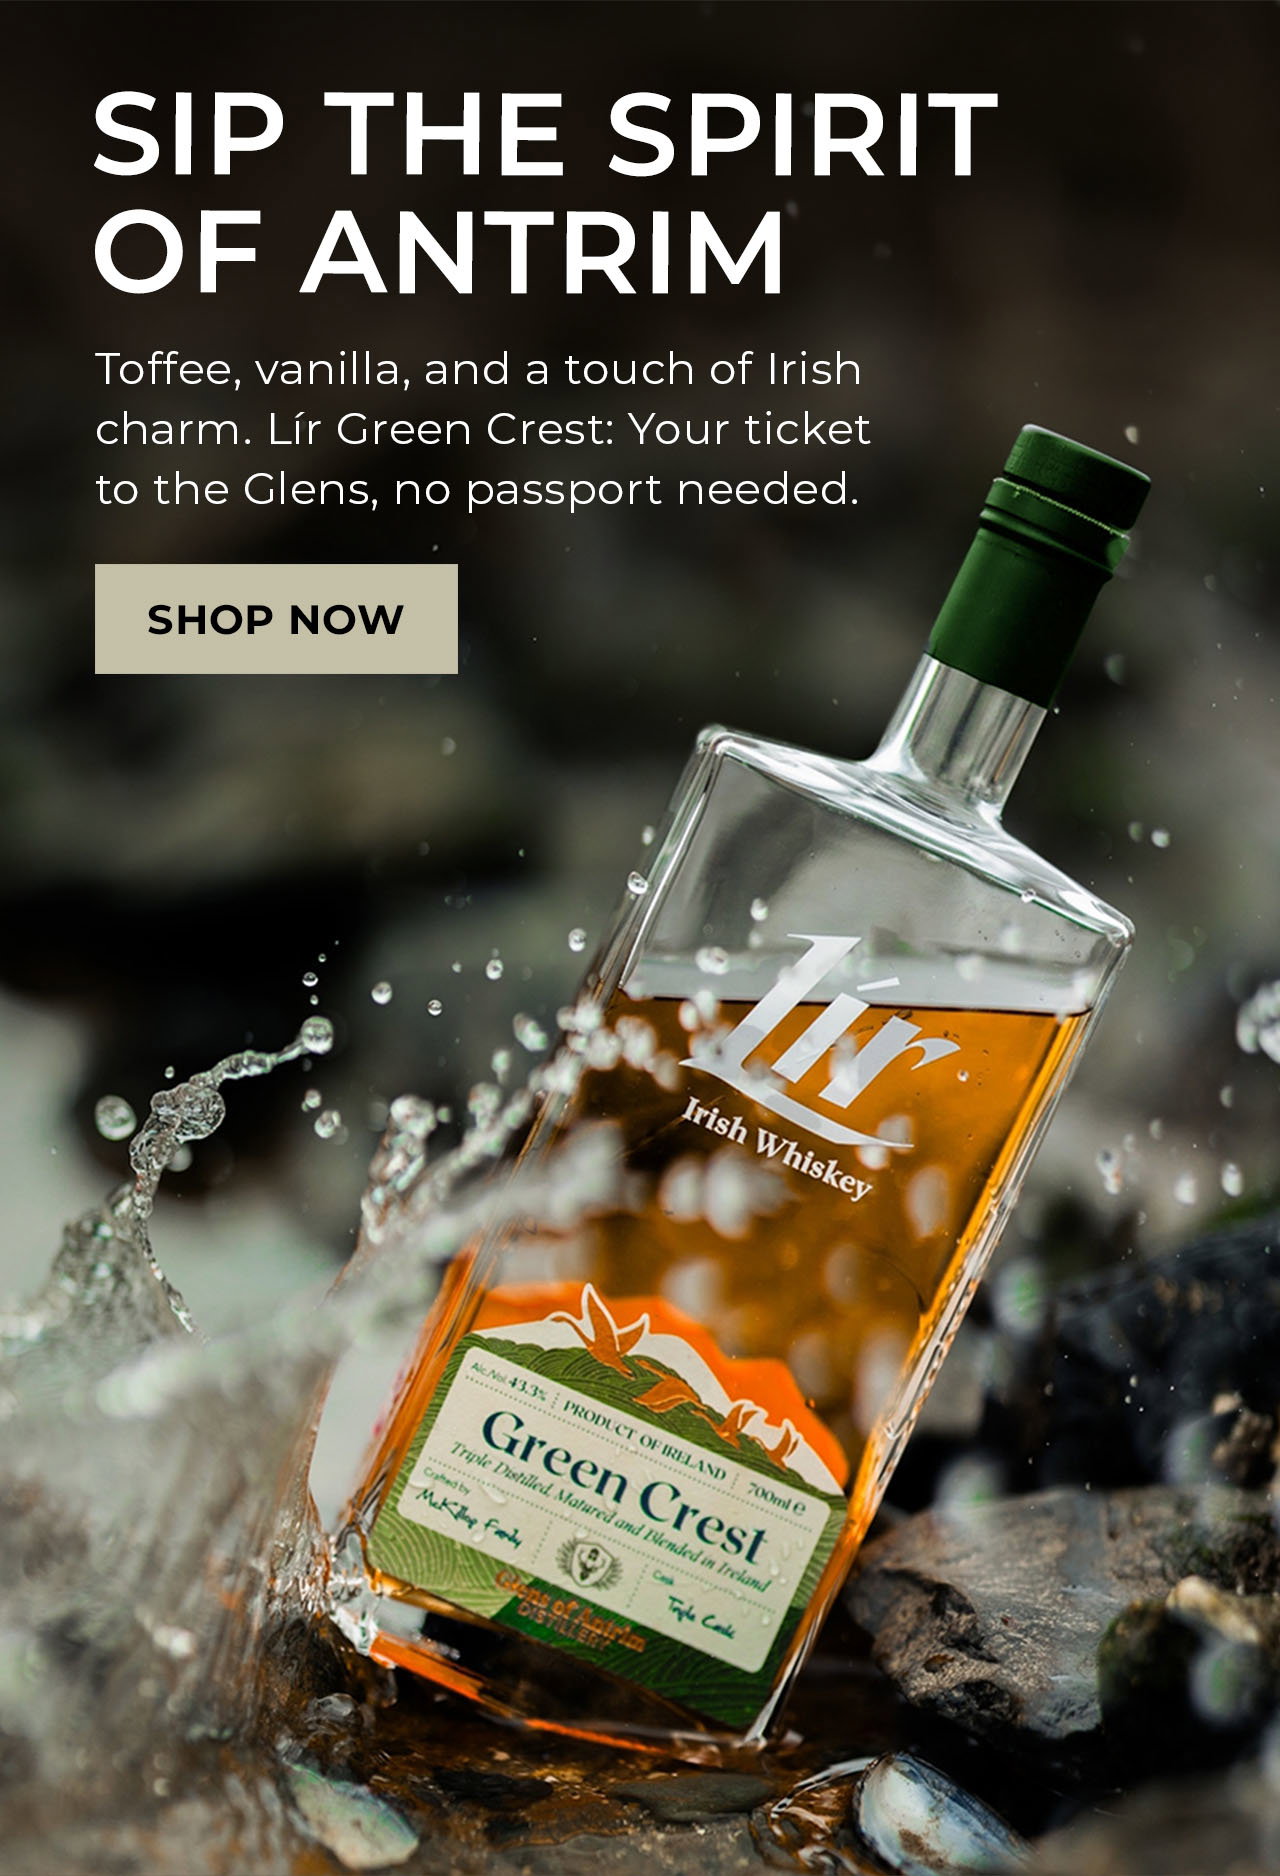  Lir Irish Whiskey | SHOP NOW